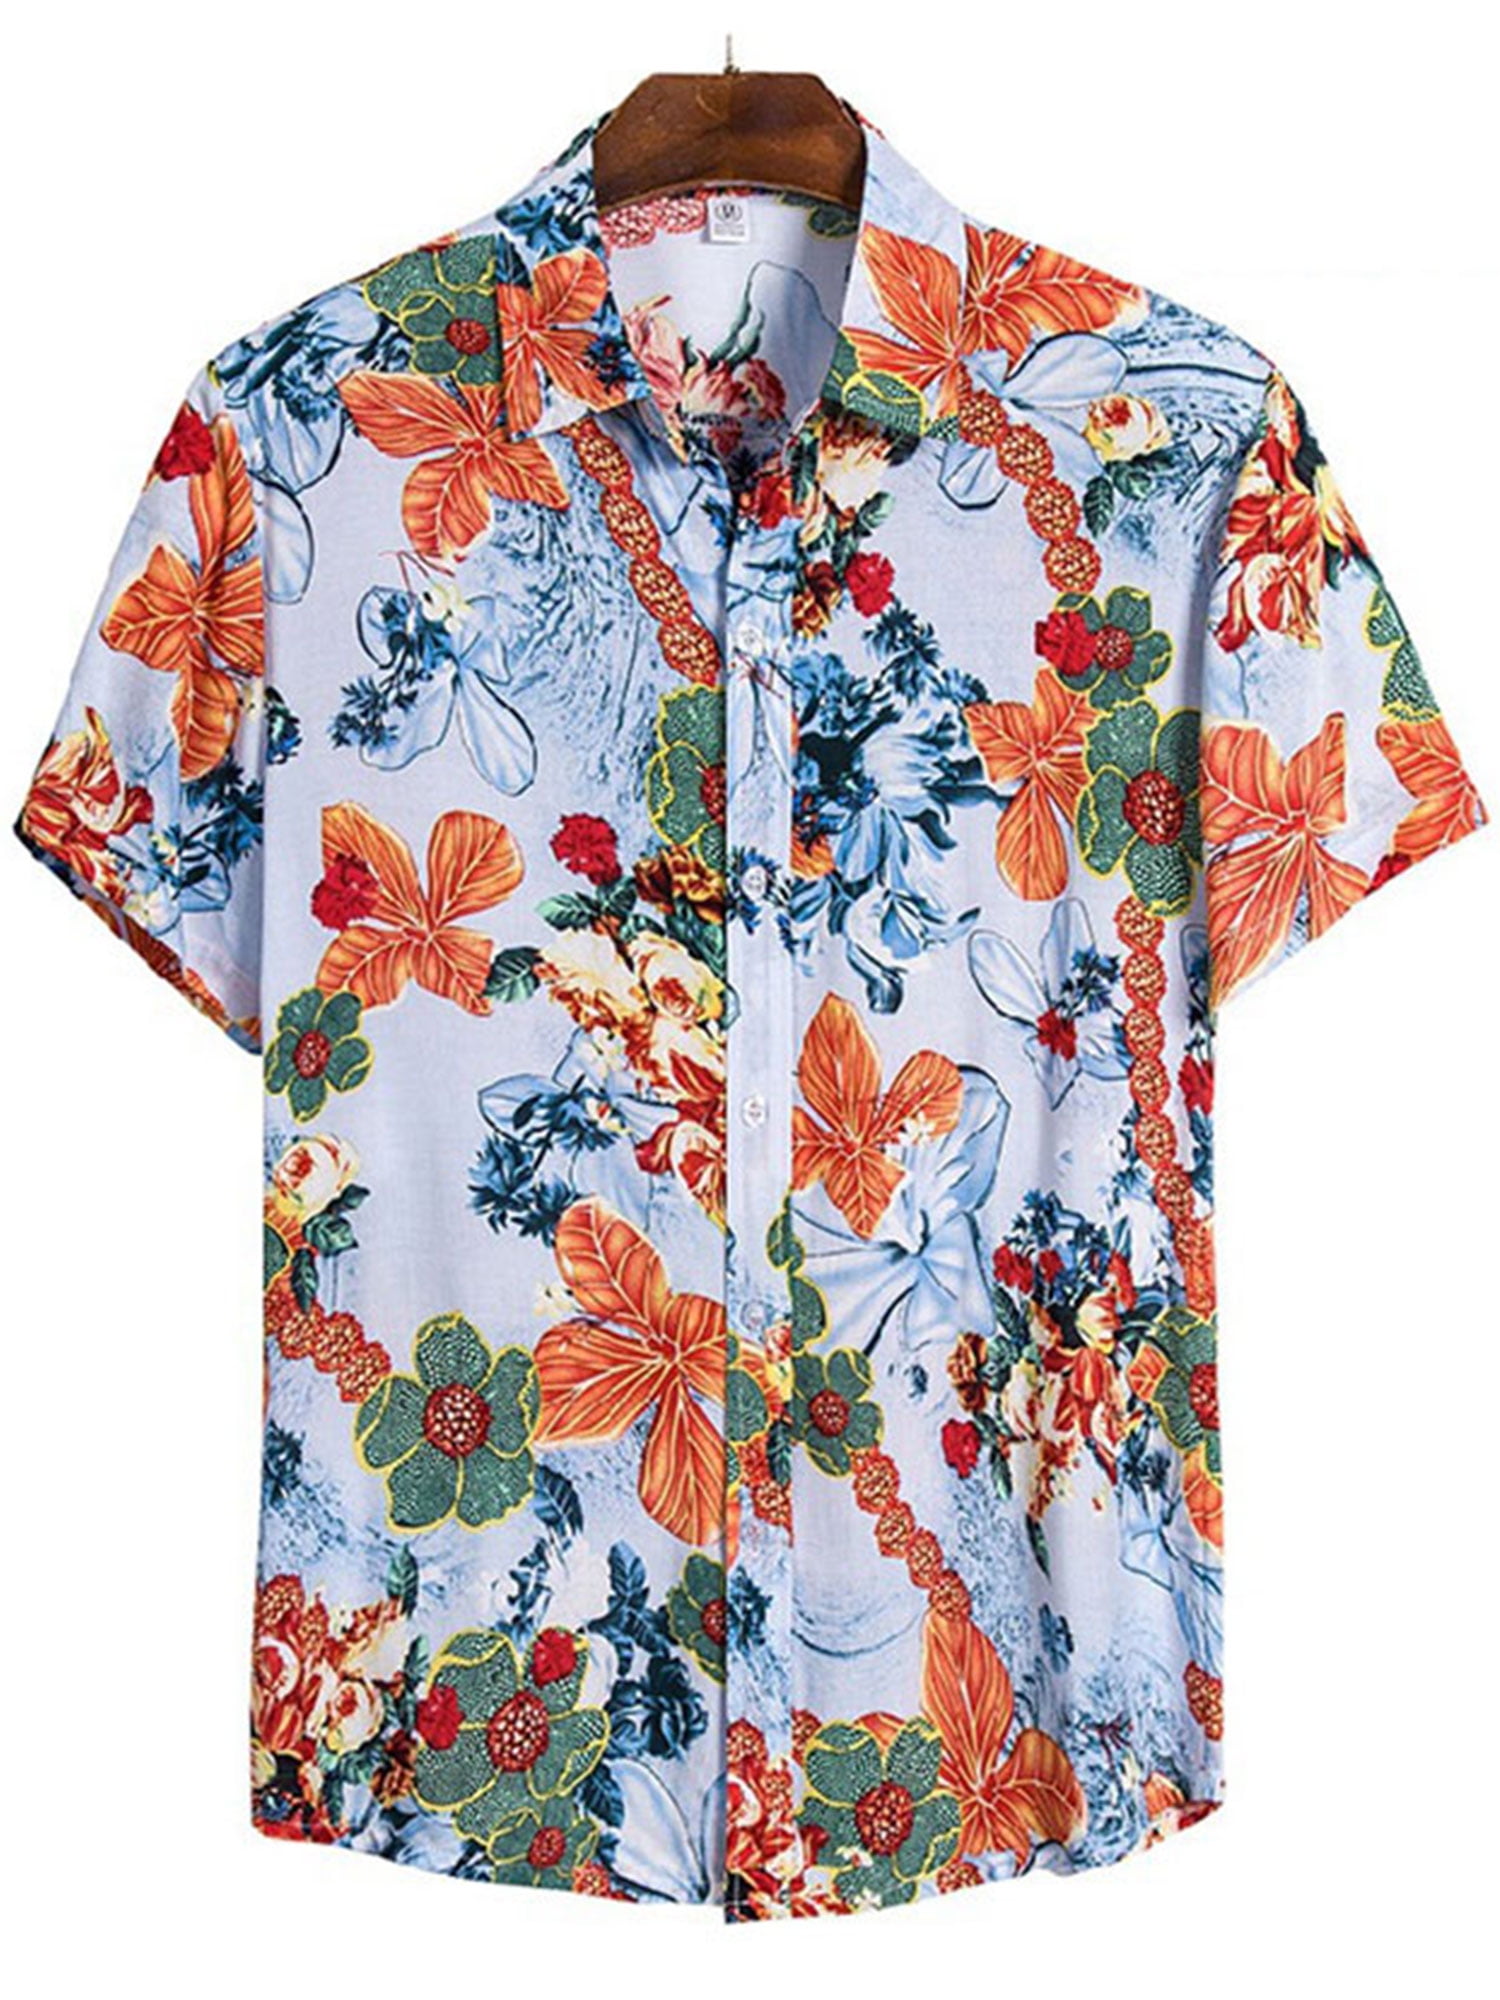 HKDGID Mens Summer Short Sleeve Japanese Kimono Hawaiian Beach Spa Shirt T-Shirt Top